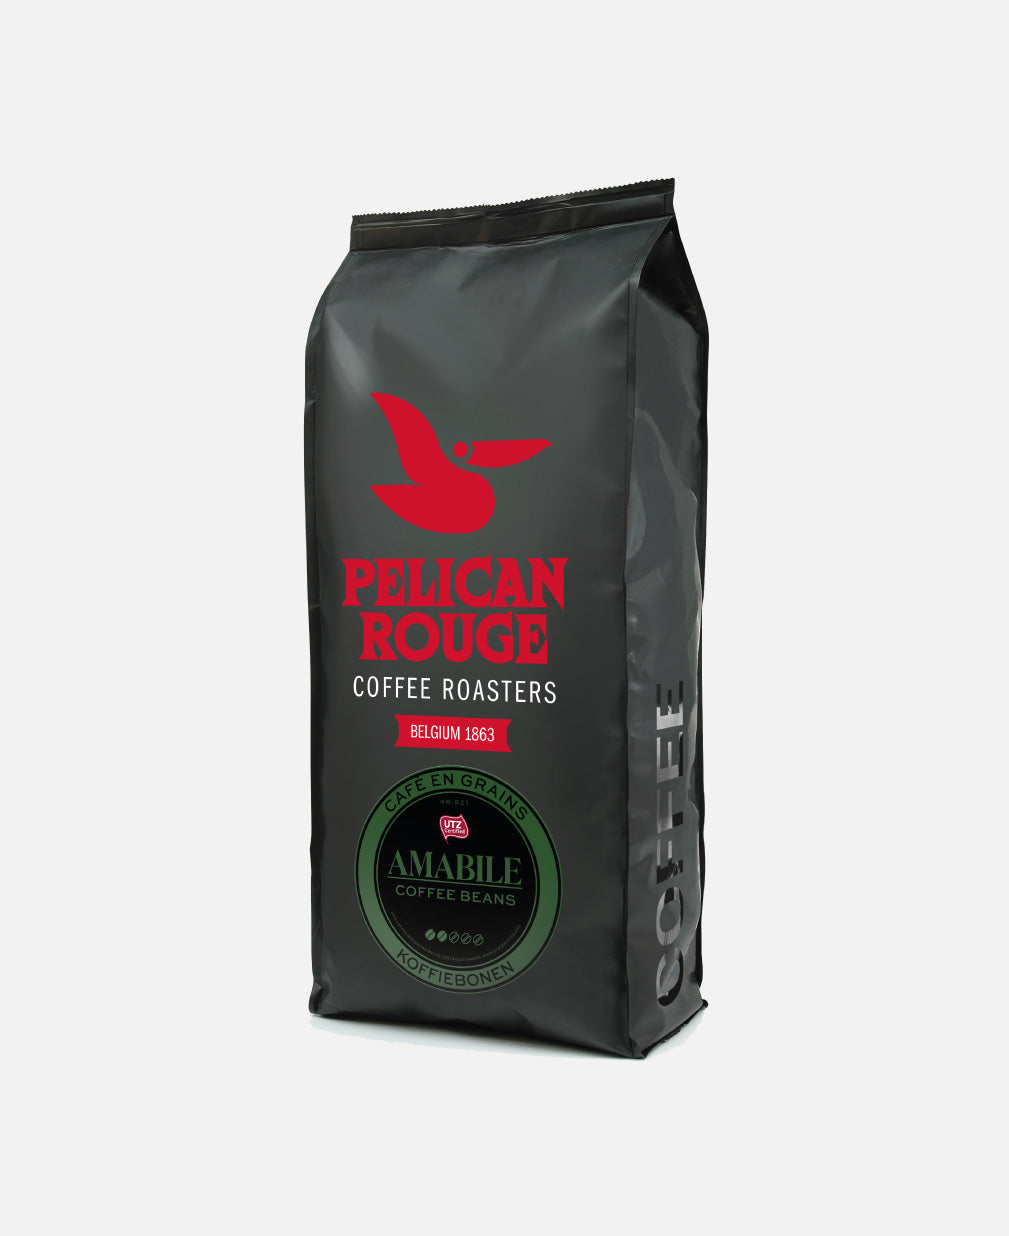 Pelican Rouge kavos pupelės automatiniams kavos aparatams  "Pelican Rouge Amabile"